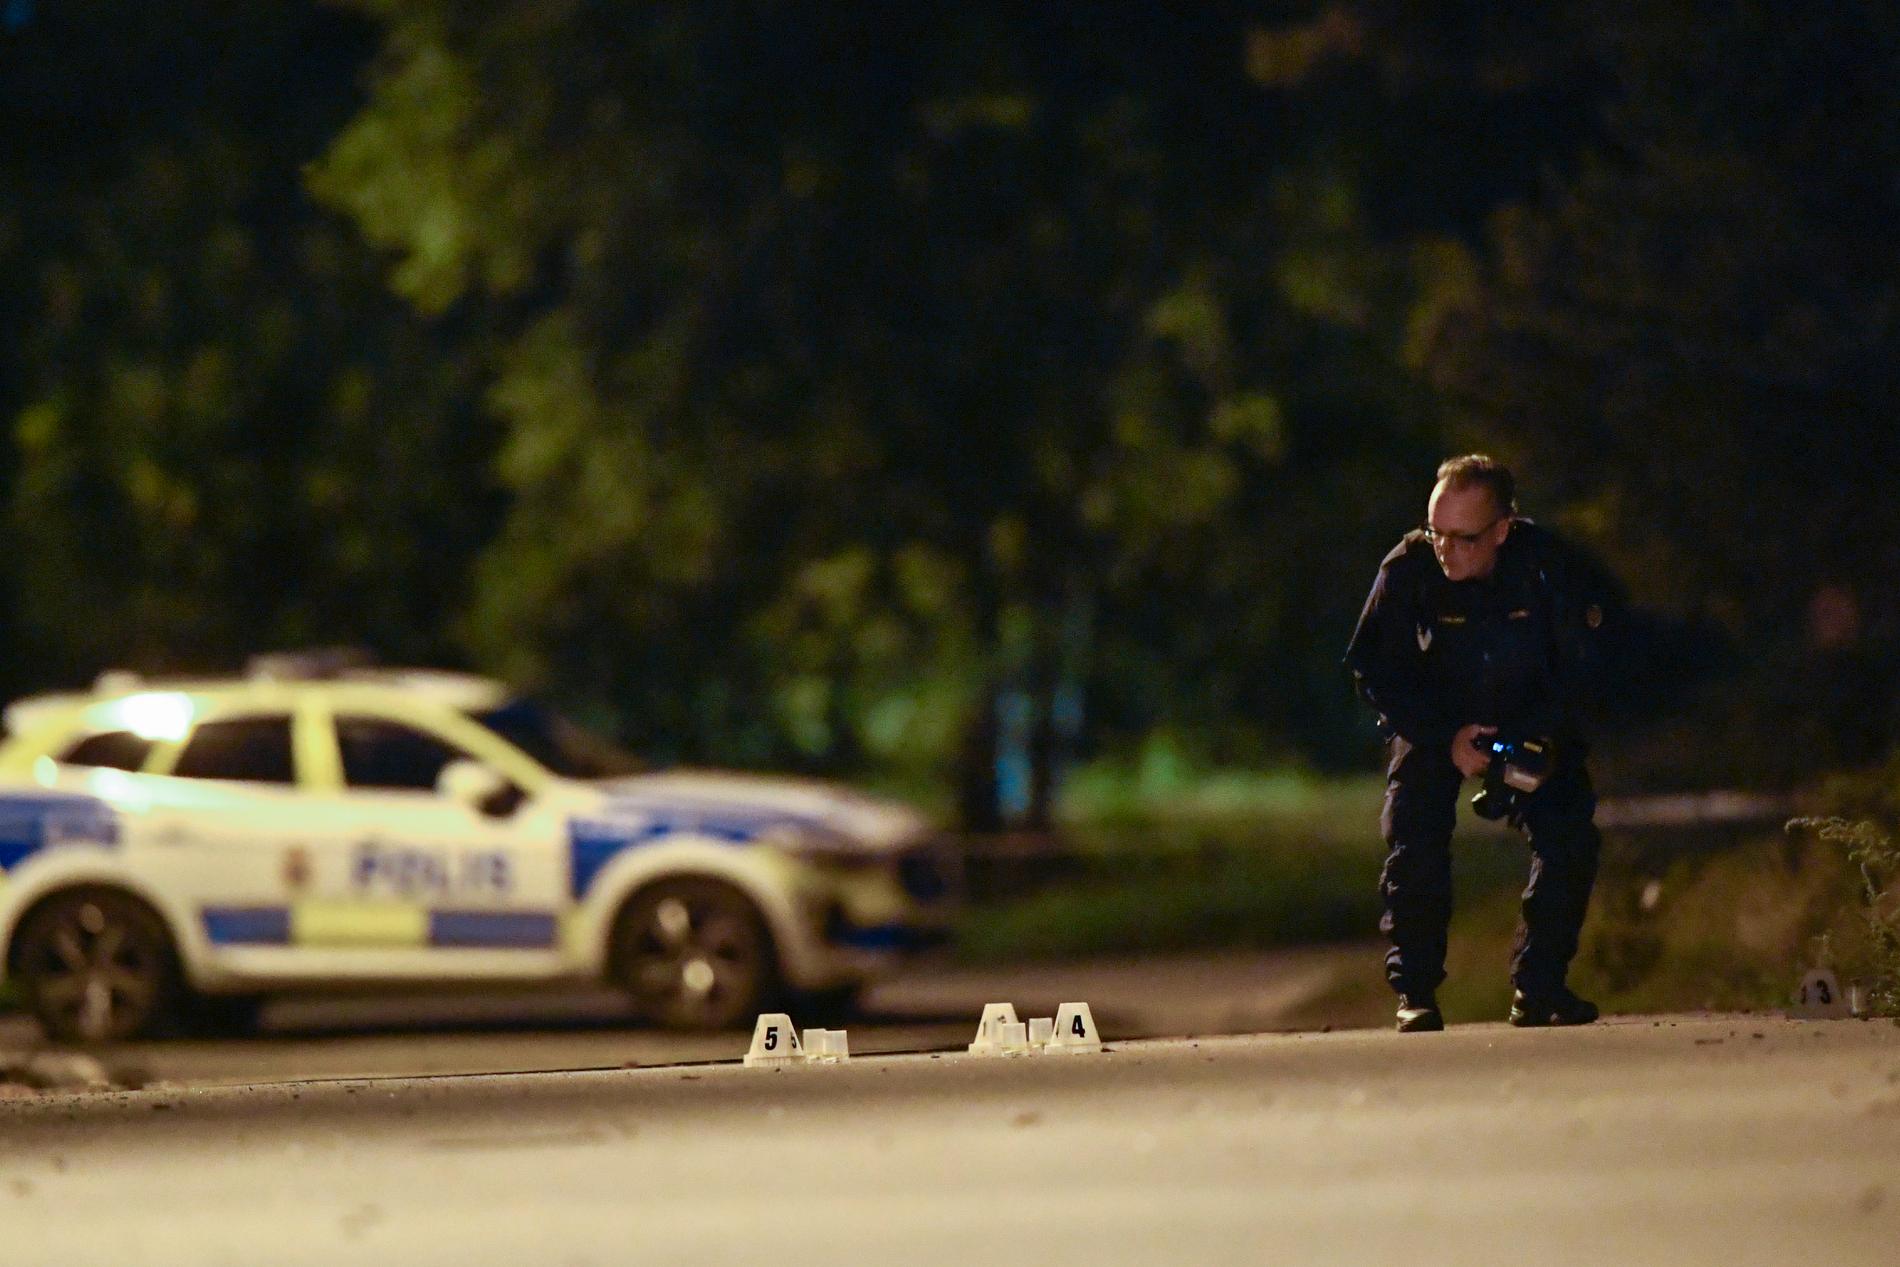 New shooting in Eskilstuna – minor child injured